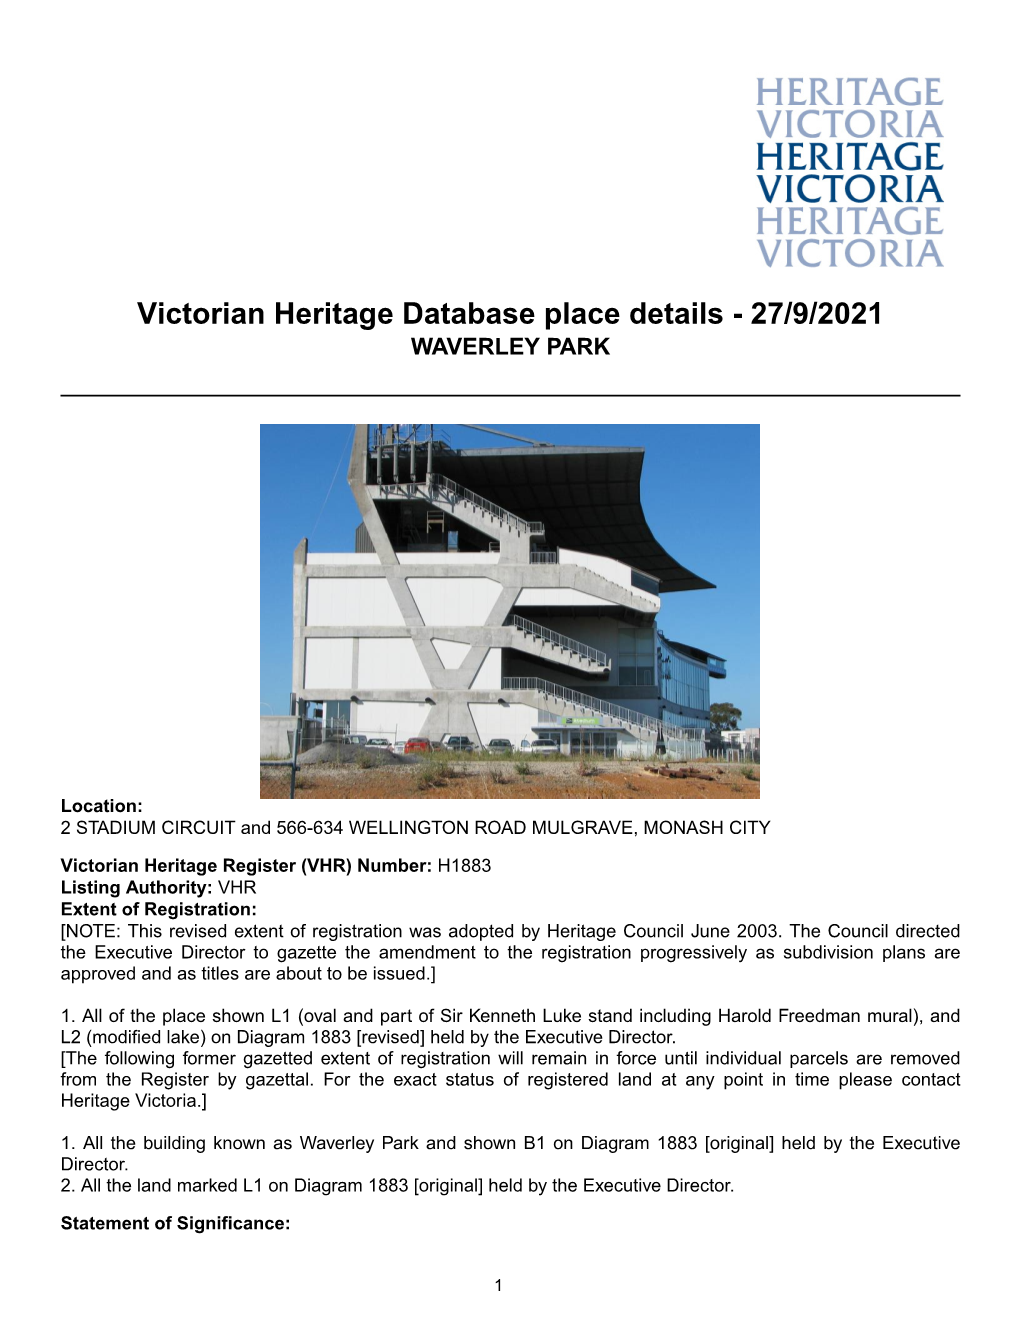 Victorian Heritage Database Place Details - 27/9/2021 WAVERLEY PARK